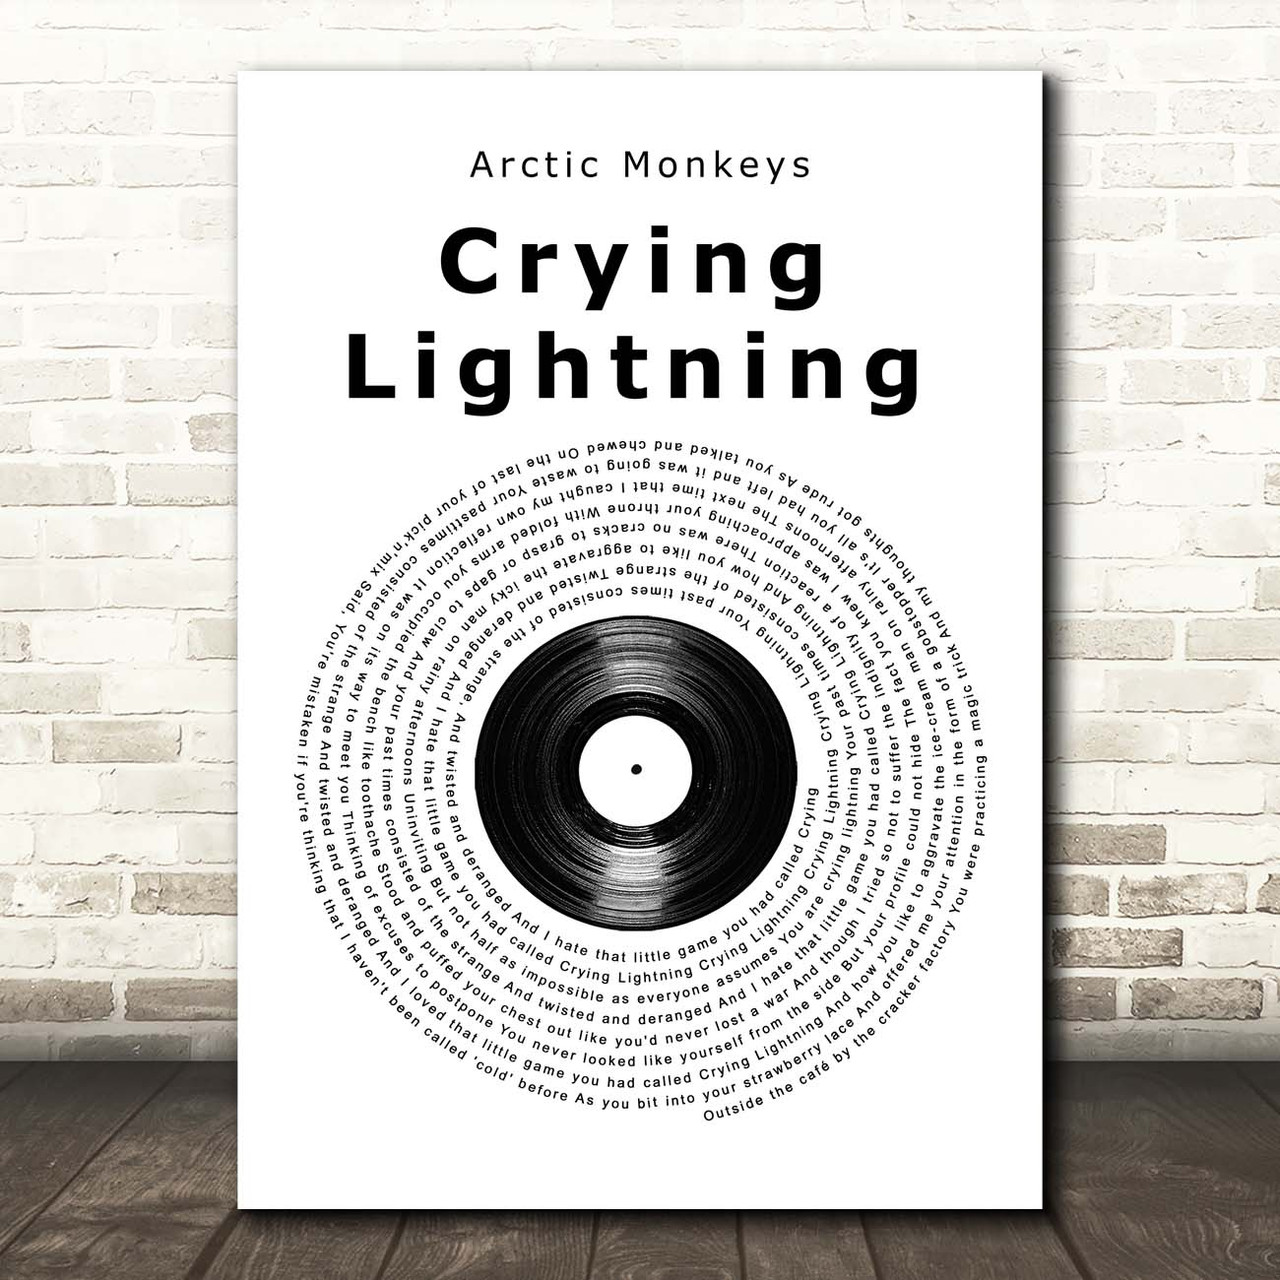 Print　Vinyl　Lightning　Crying　Monkeys　Arctic　Lyric　Record　Song